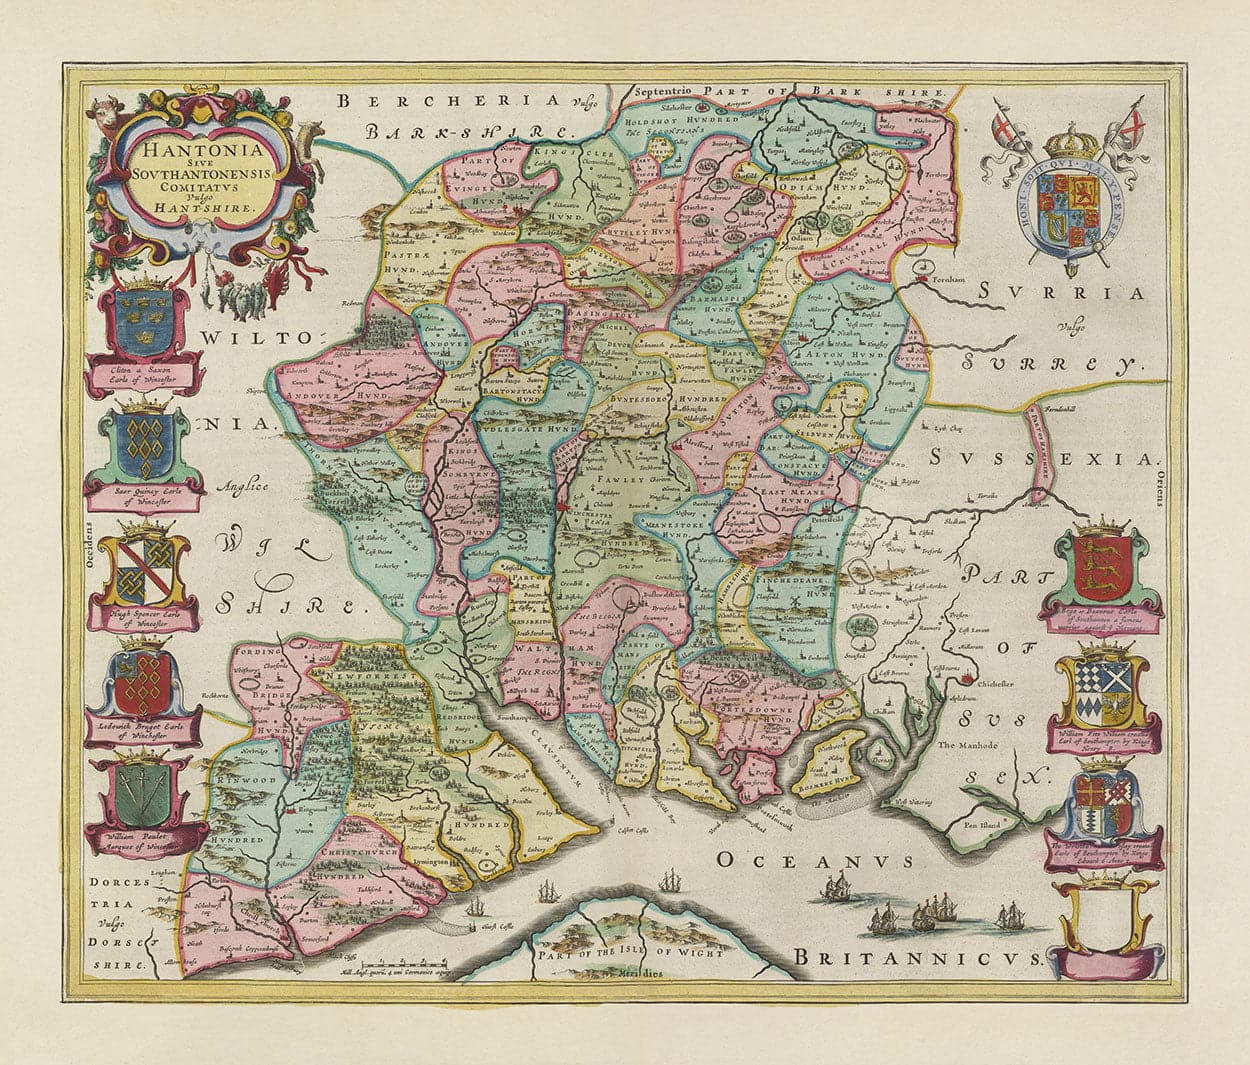 Alte Karte von Hampshire, 1665 von Joan Blaeu - Winchester, Portsmouth, Southampton, Basingstoke, Farnborough, Havant